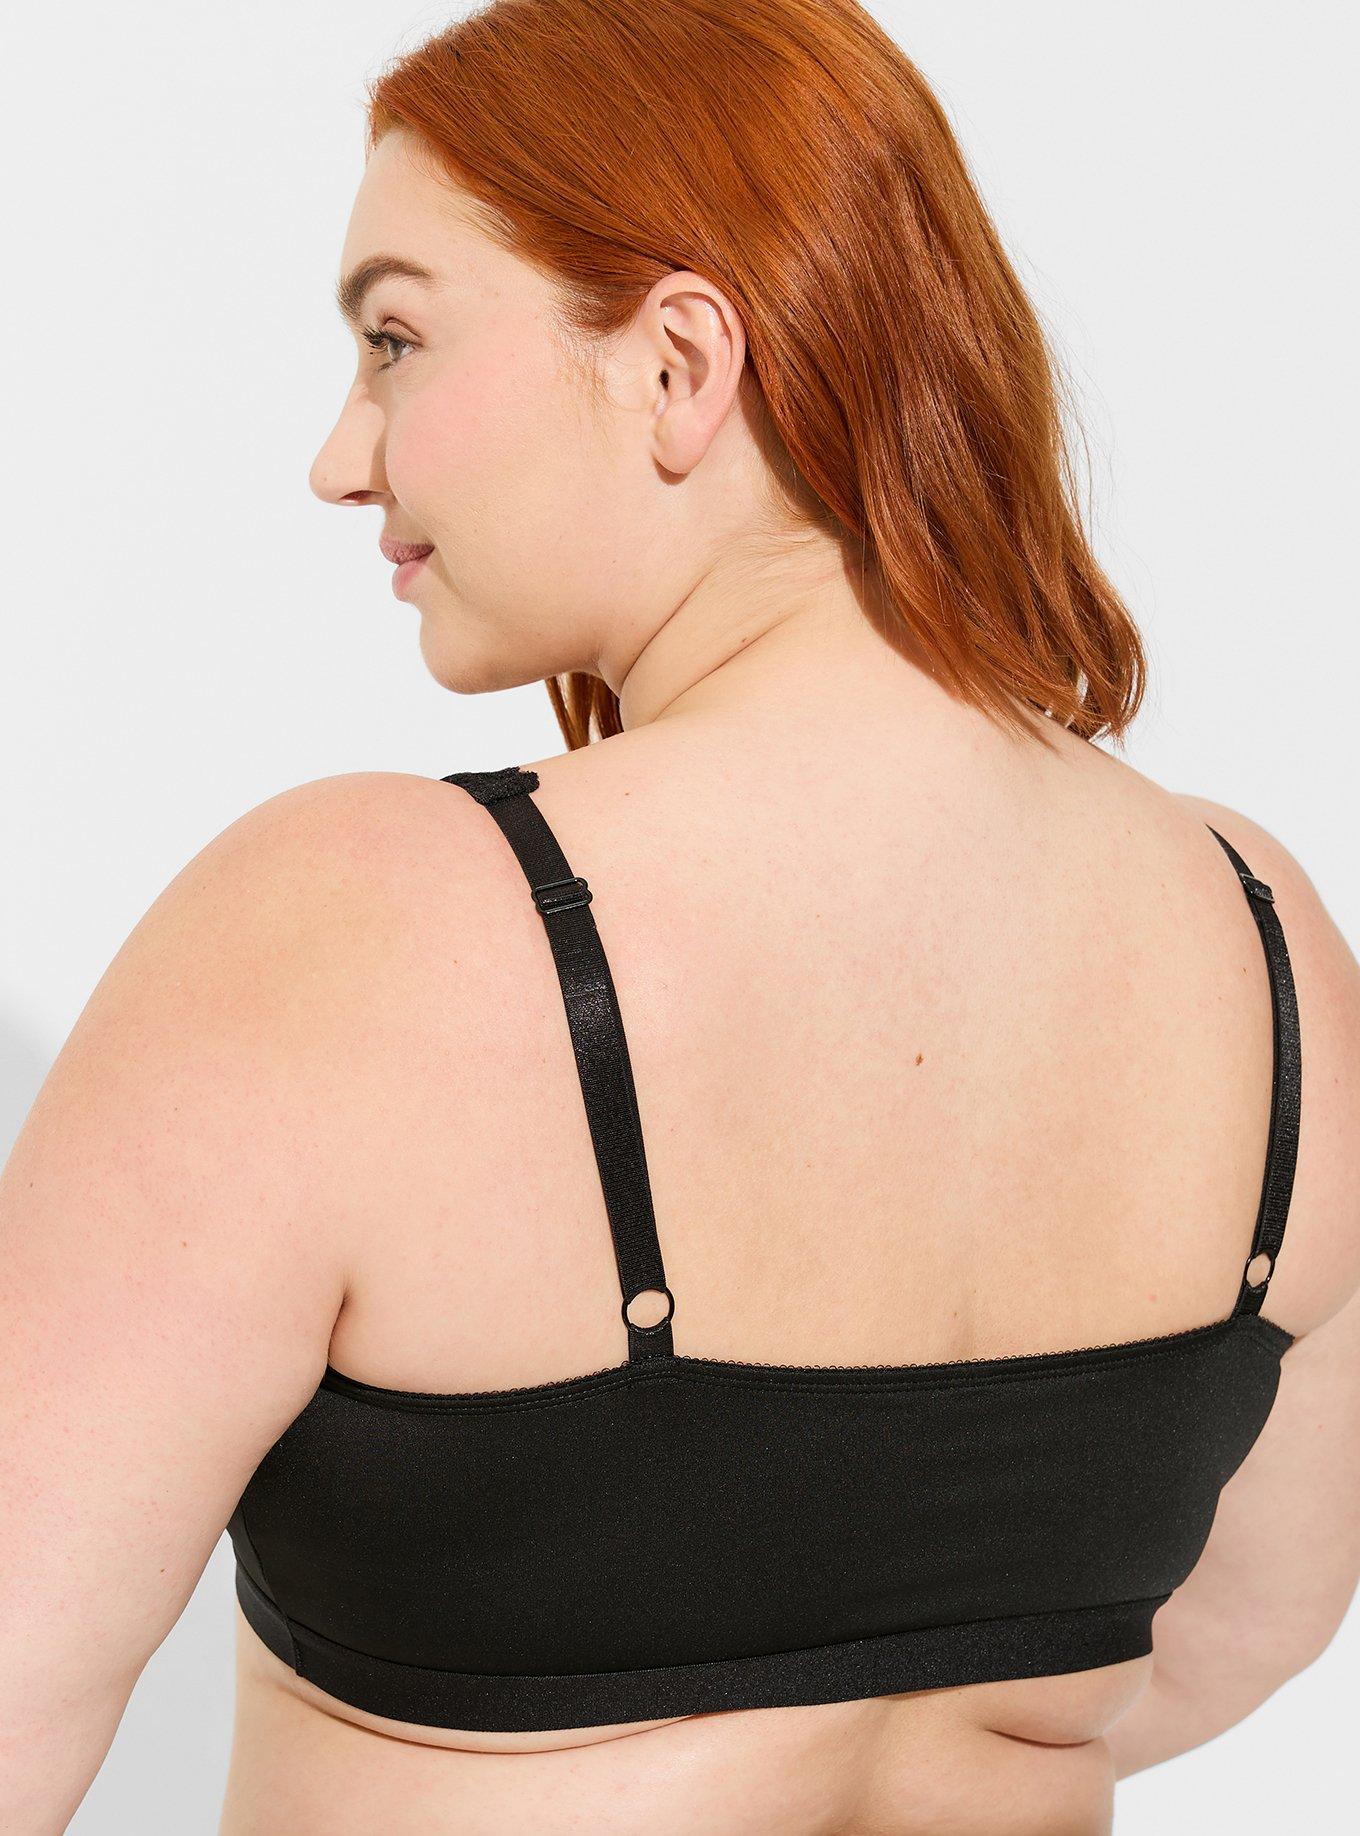 Womens Plus Size Lace Wireless Bralette Microfiber Band Adjustable Bra Top